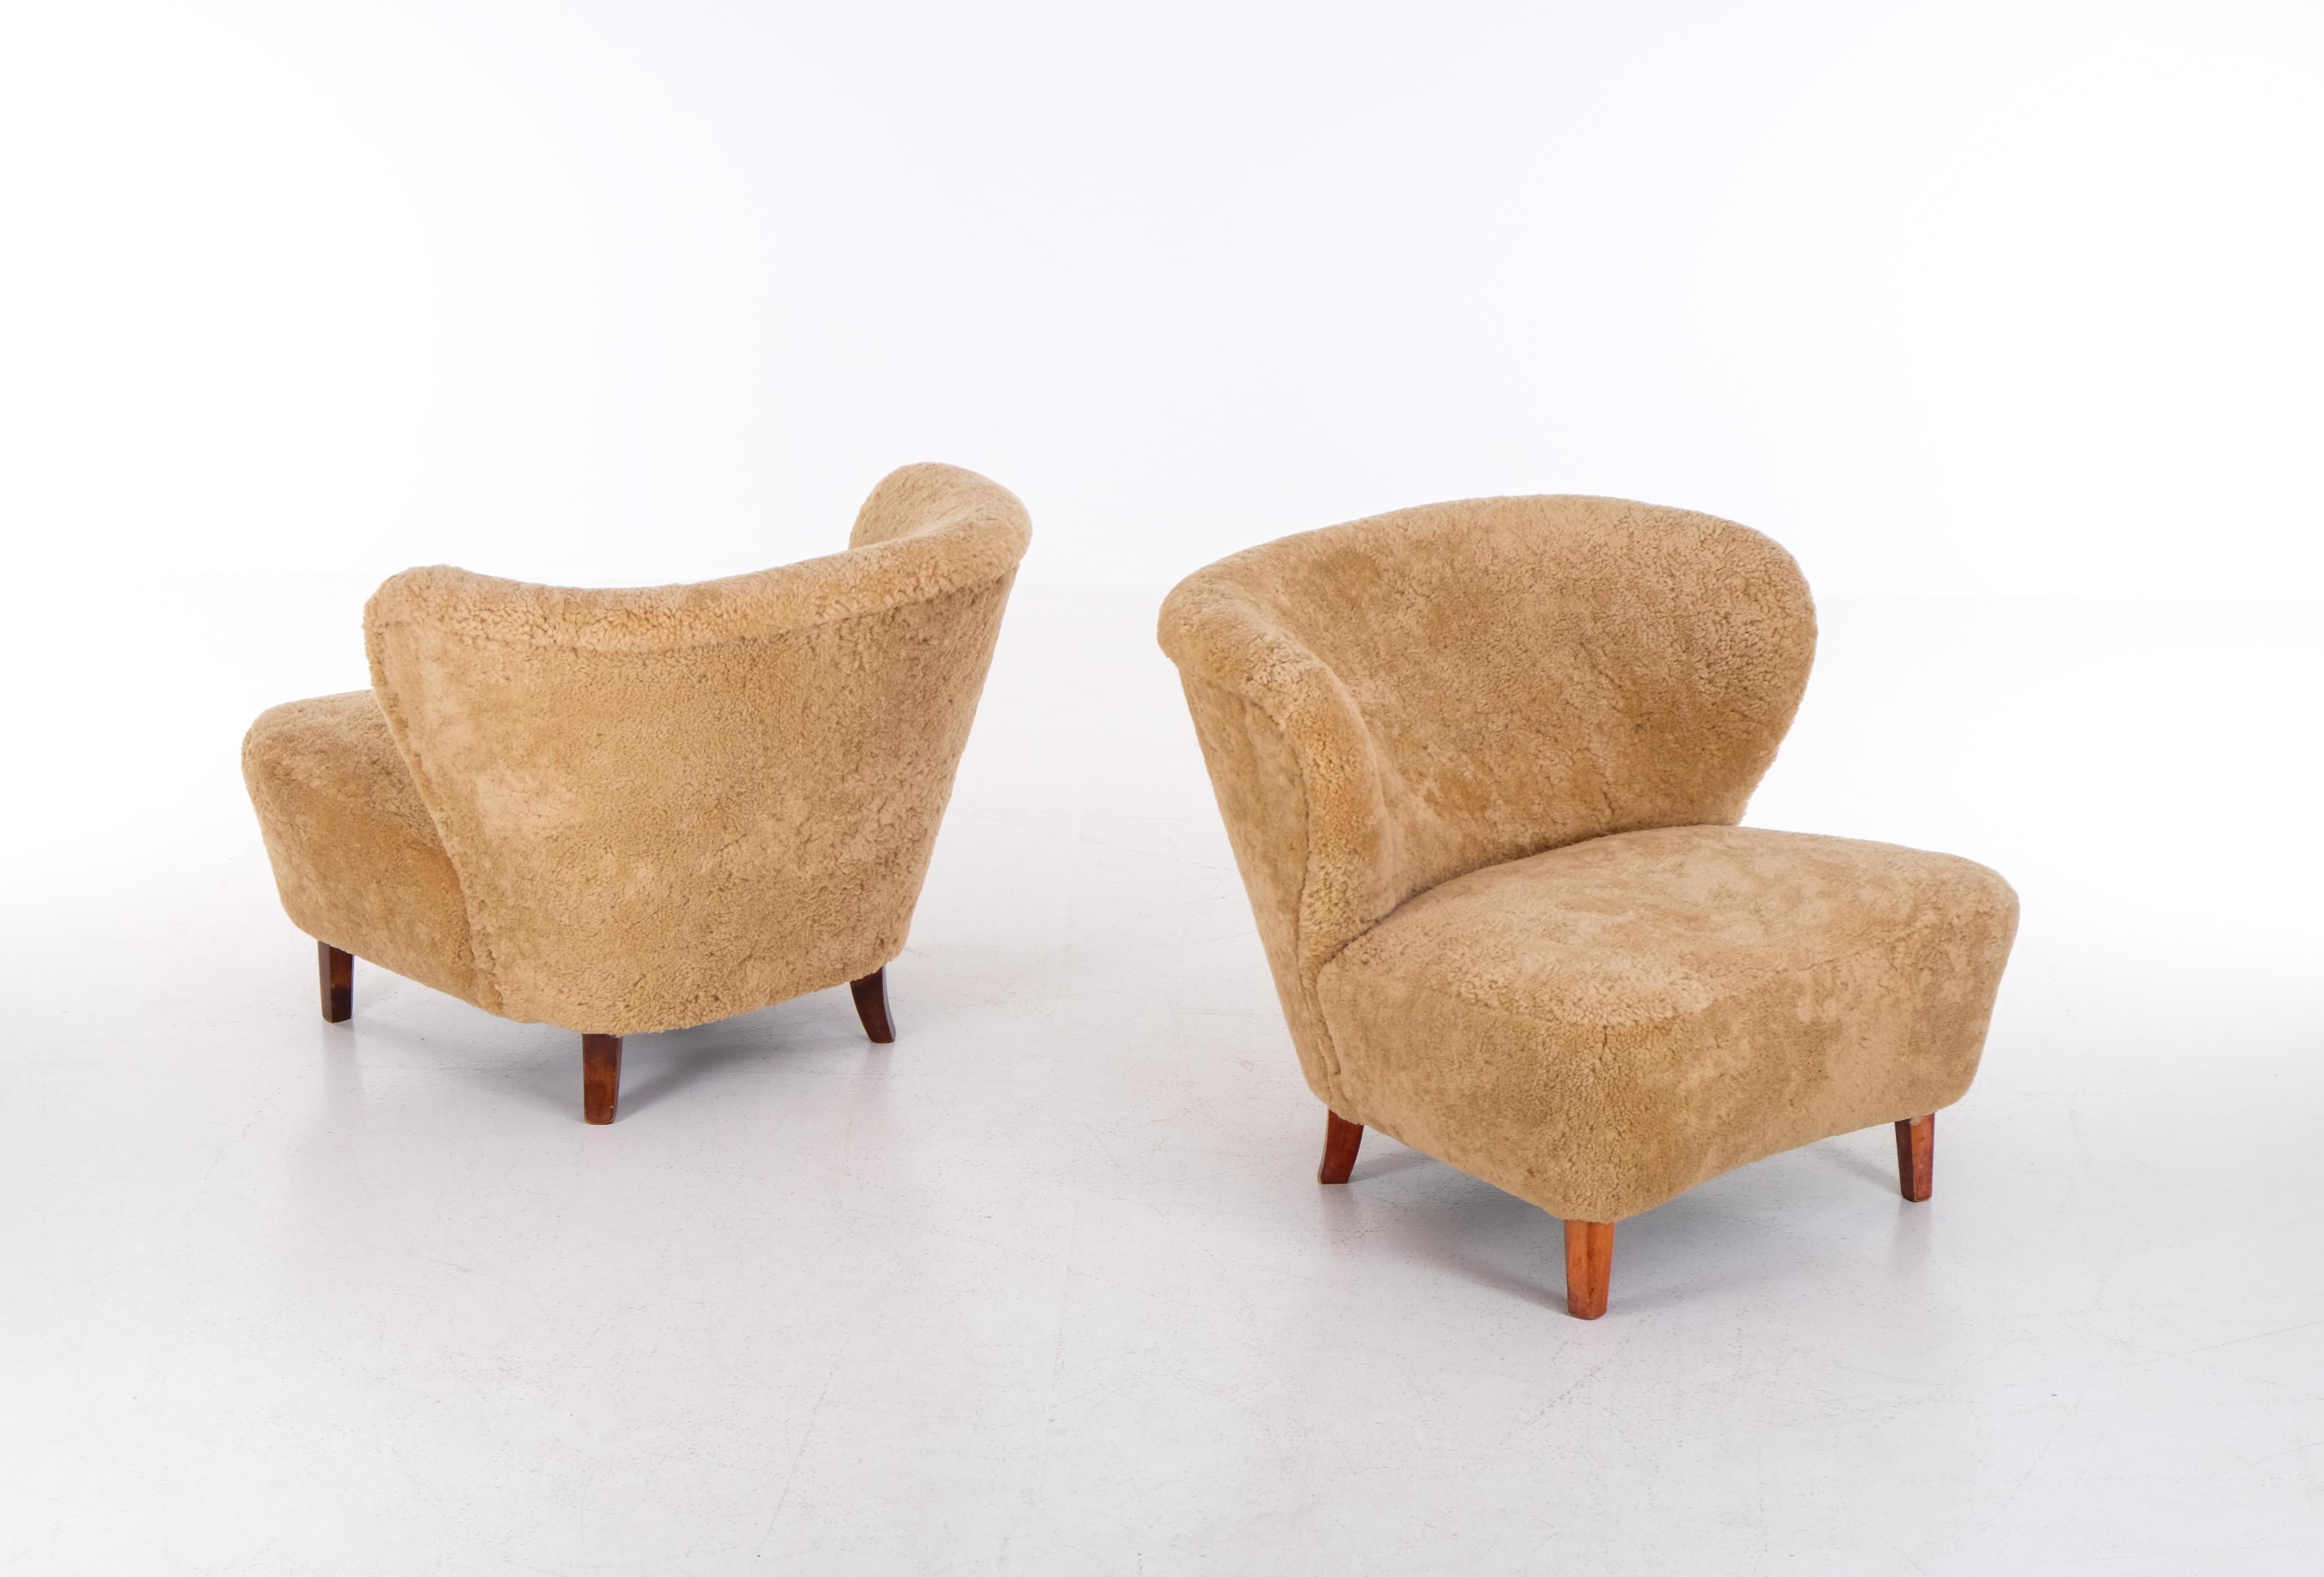 Scandinavian Modern Pair of Easy Chairs by AB Erik Ek's Snickerifabrik, Malmö, Sweden, 1940s For Sale